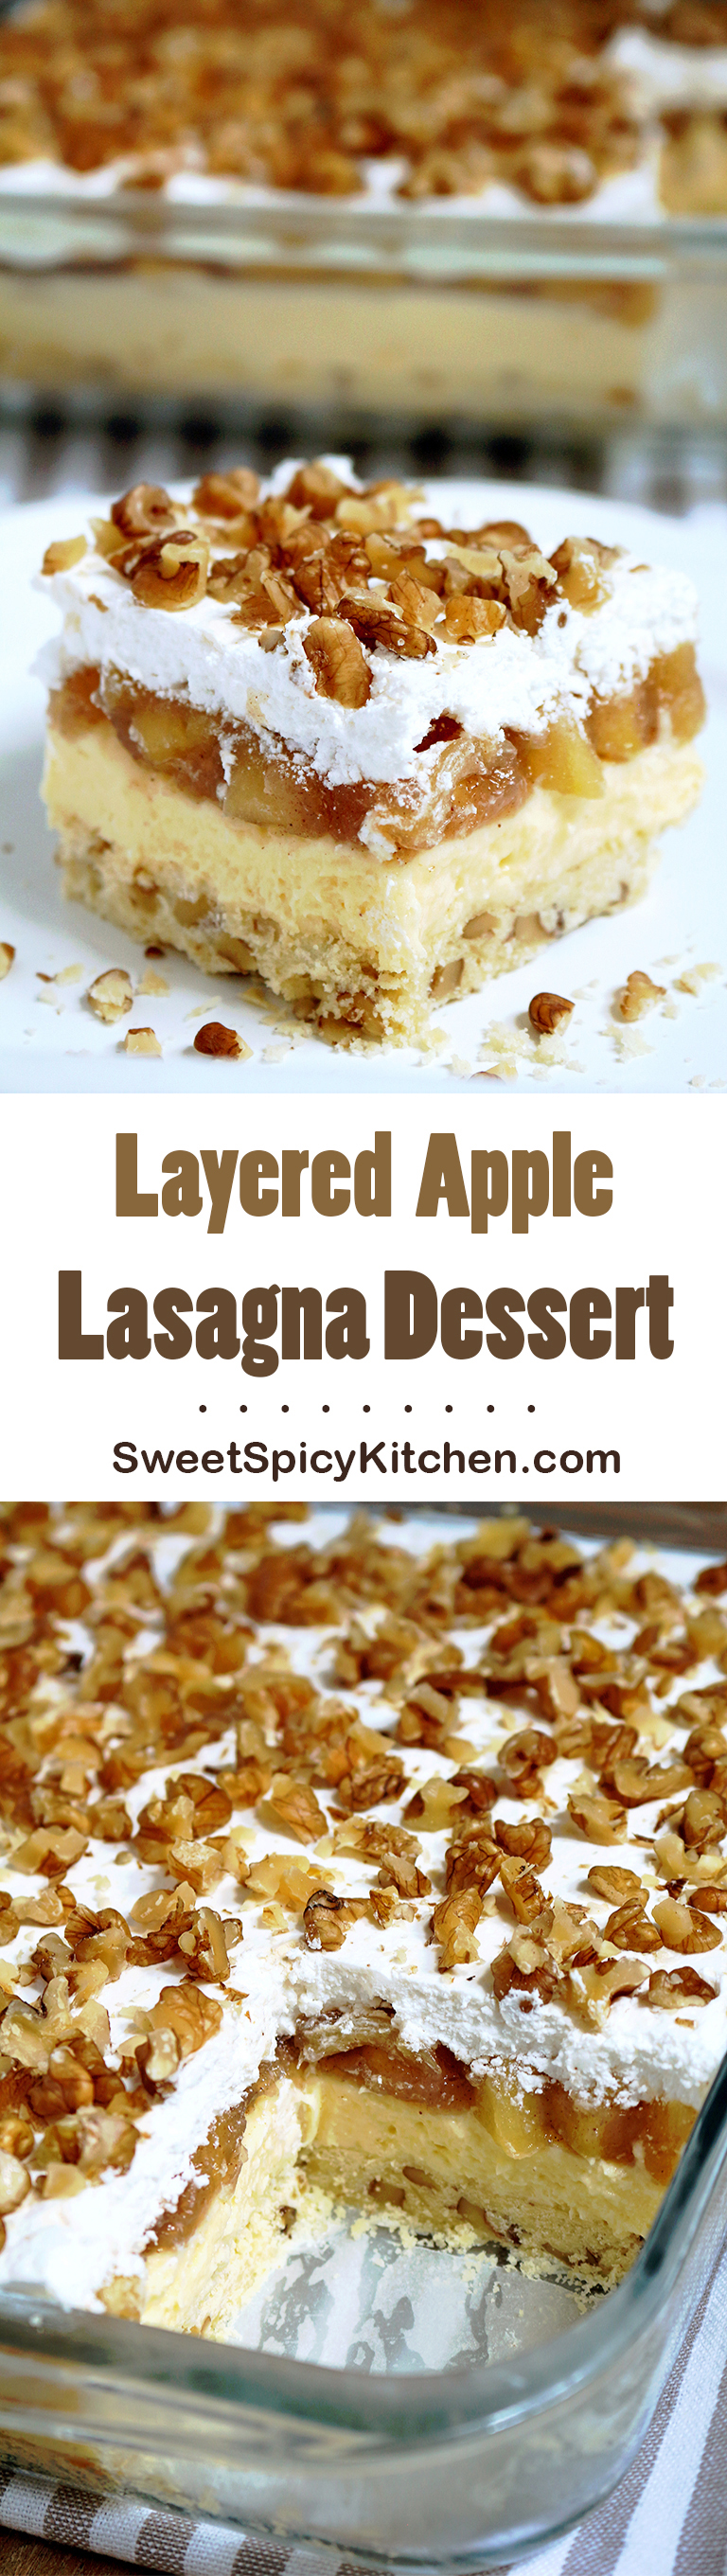 Layered Apple Lasagna Dessert